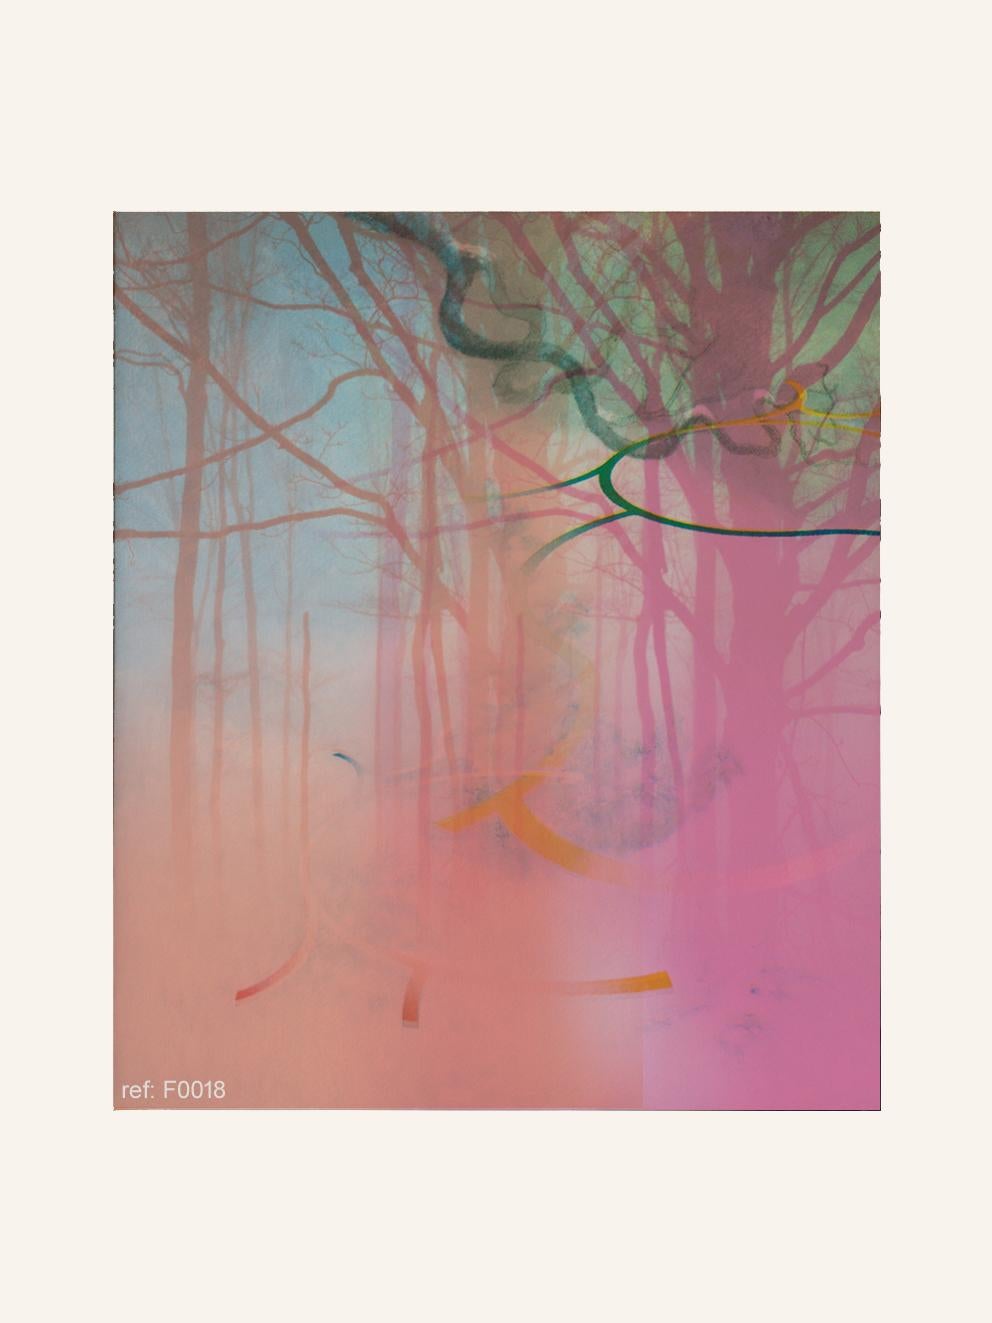 Francisco Nicolás Landscape Print - Pink Forest - Contemporary, Abstract, Modern, Pop art, Surrealist, Landscape